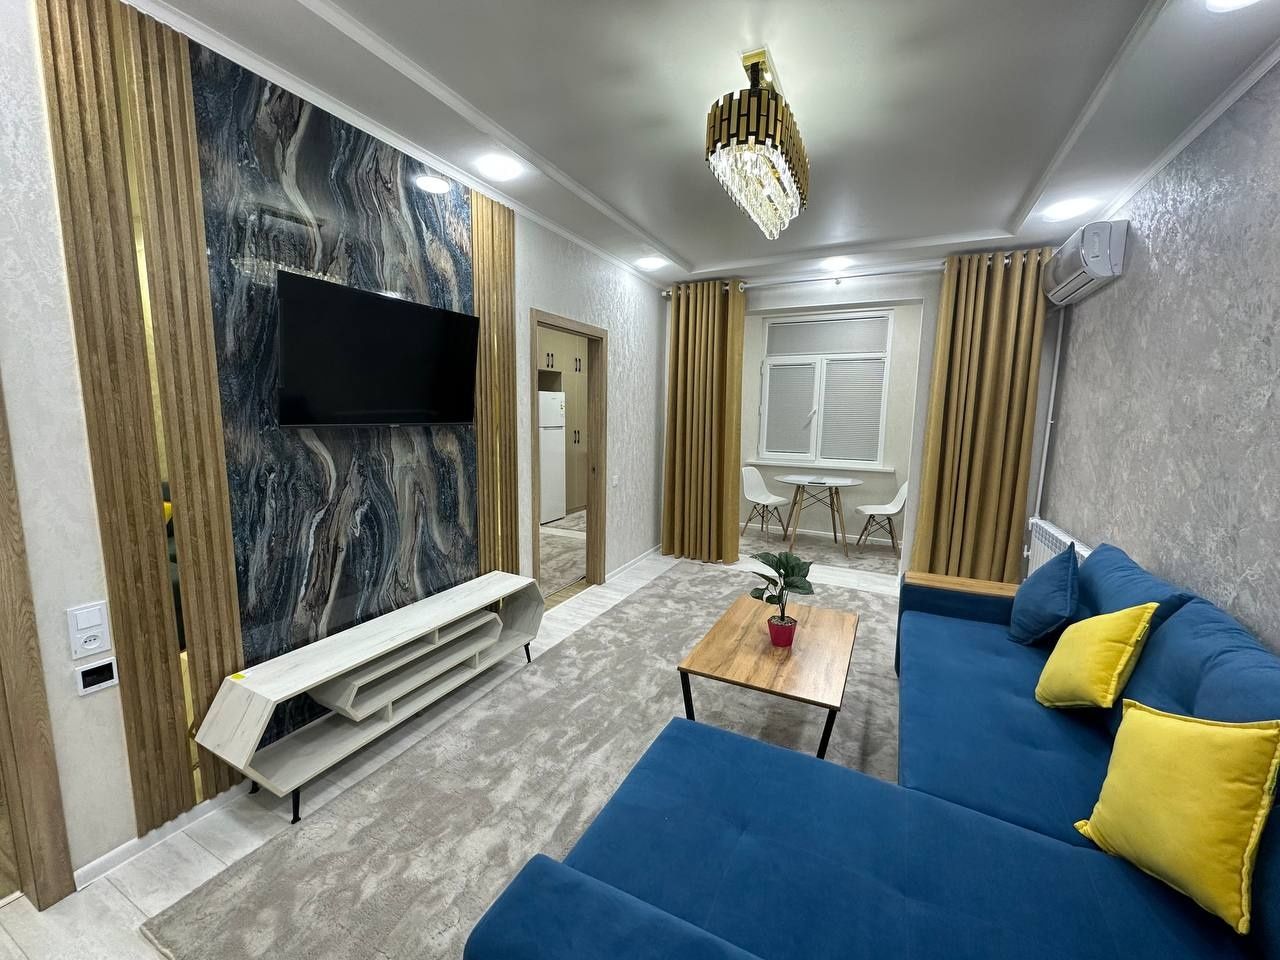 Фархадский Евро LUX 2-комнатная 55кв.м мебель +техника